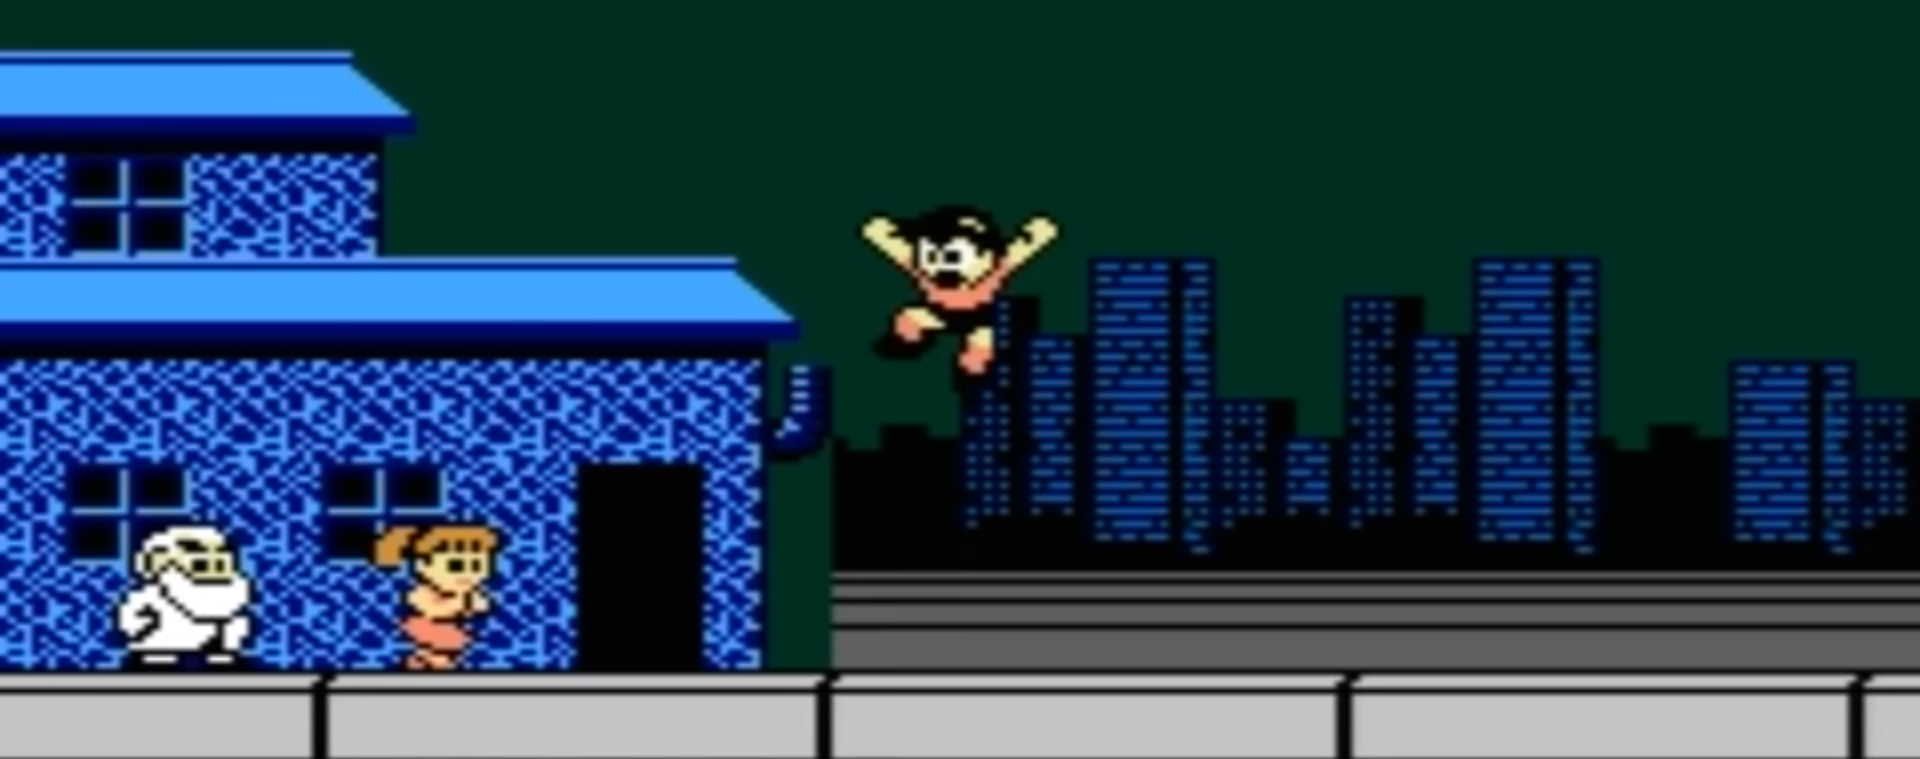 Mega Man Gameplay Dr. Light and Roll (left), Jumping Mega Man (Center)